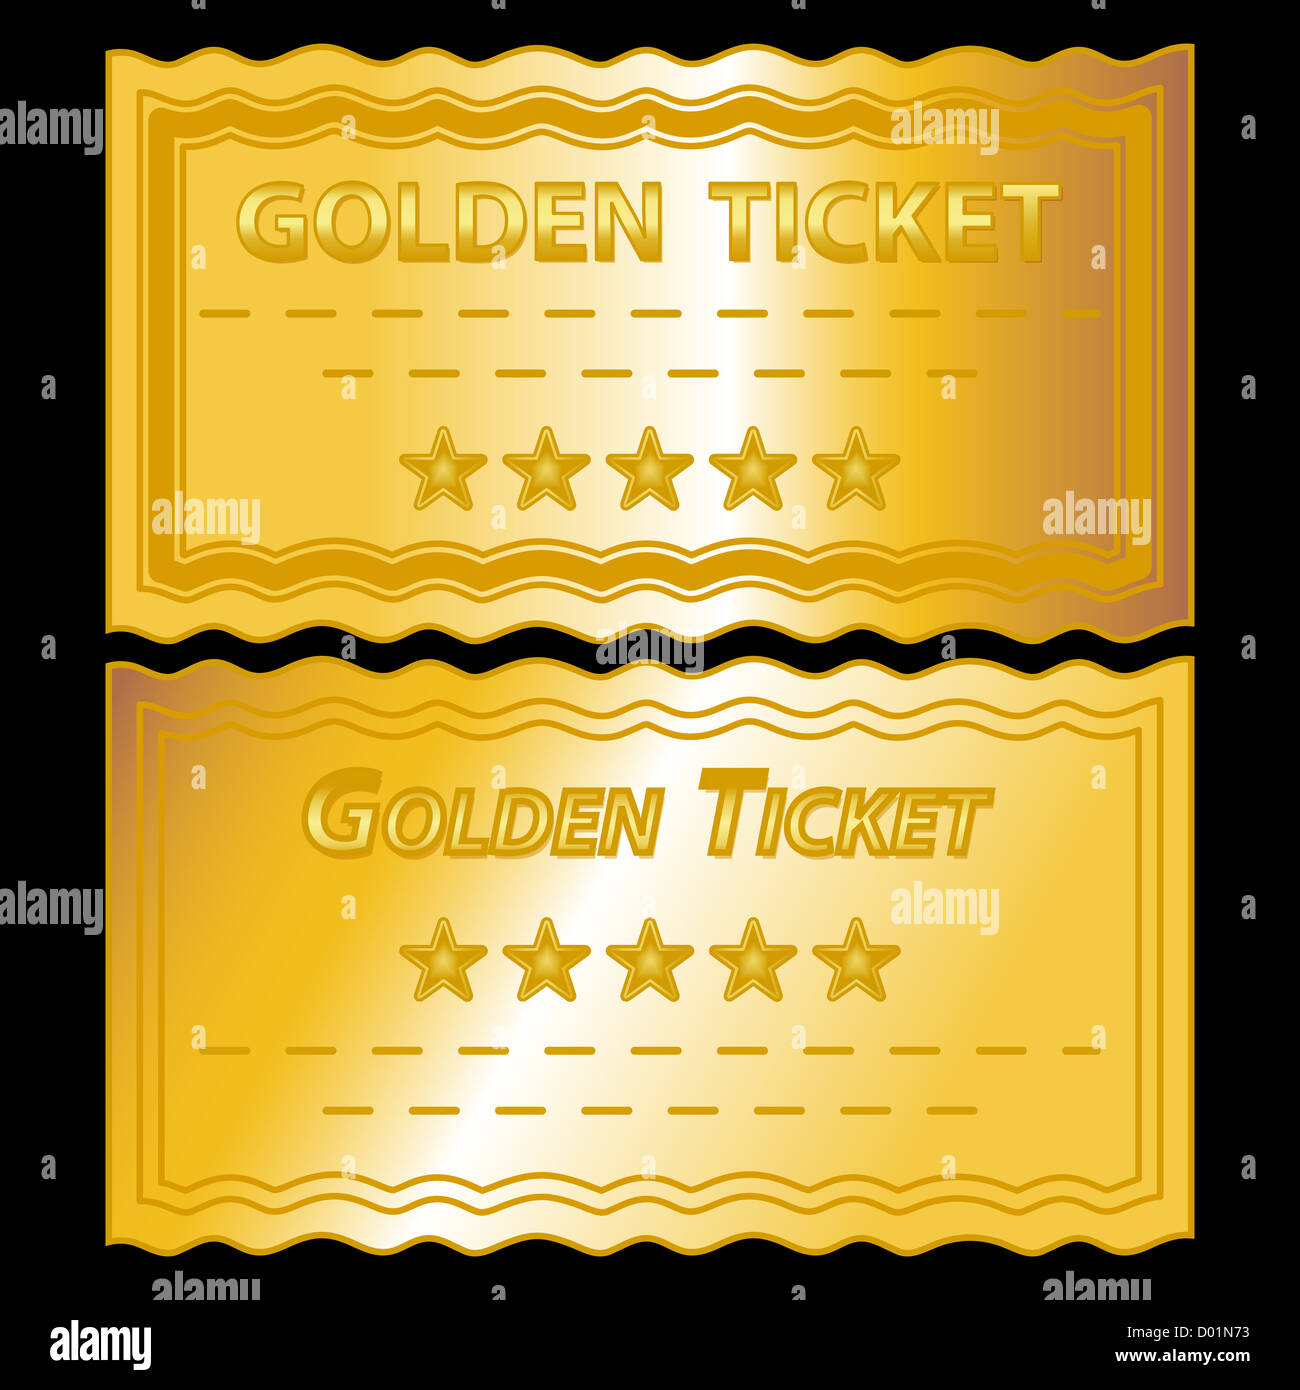 illustration of golden tickets on black background Stock Photo